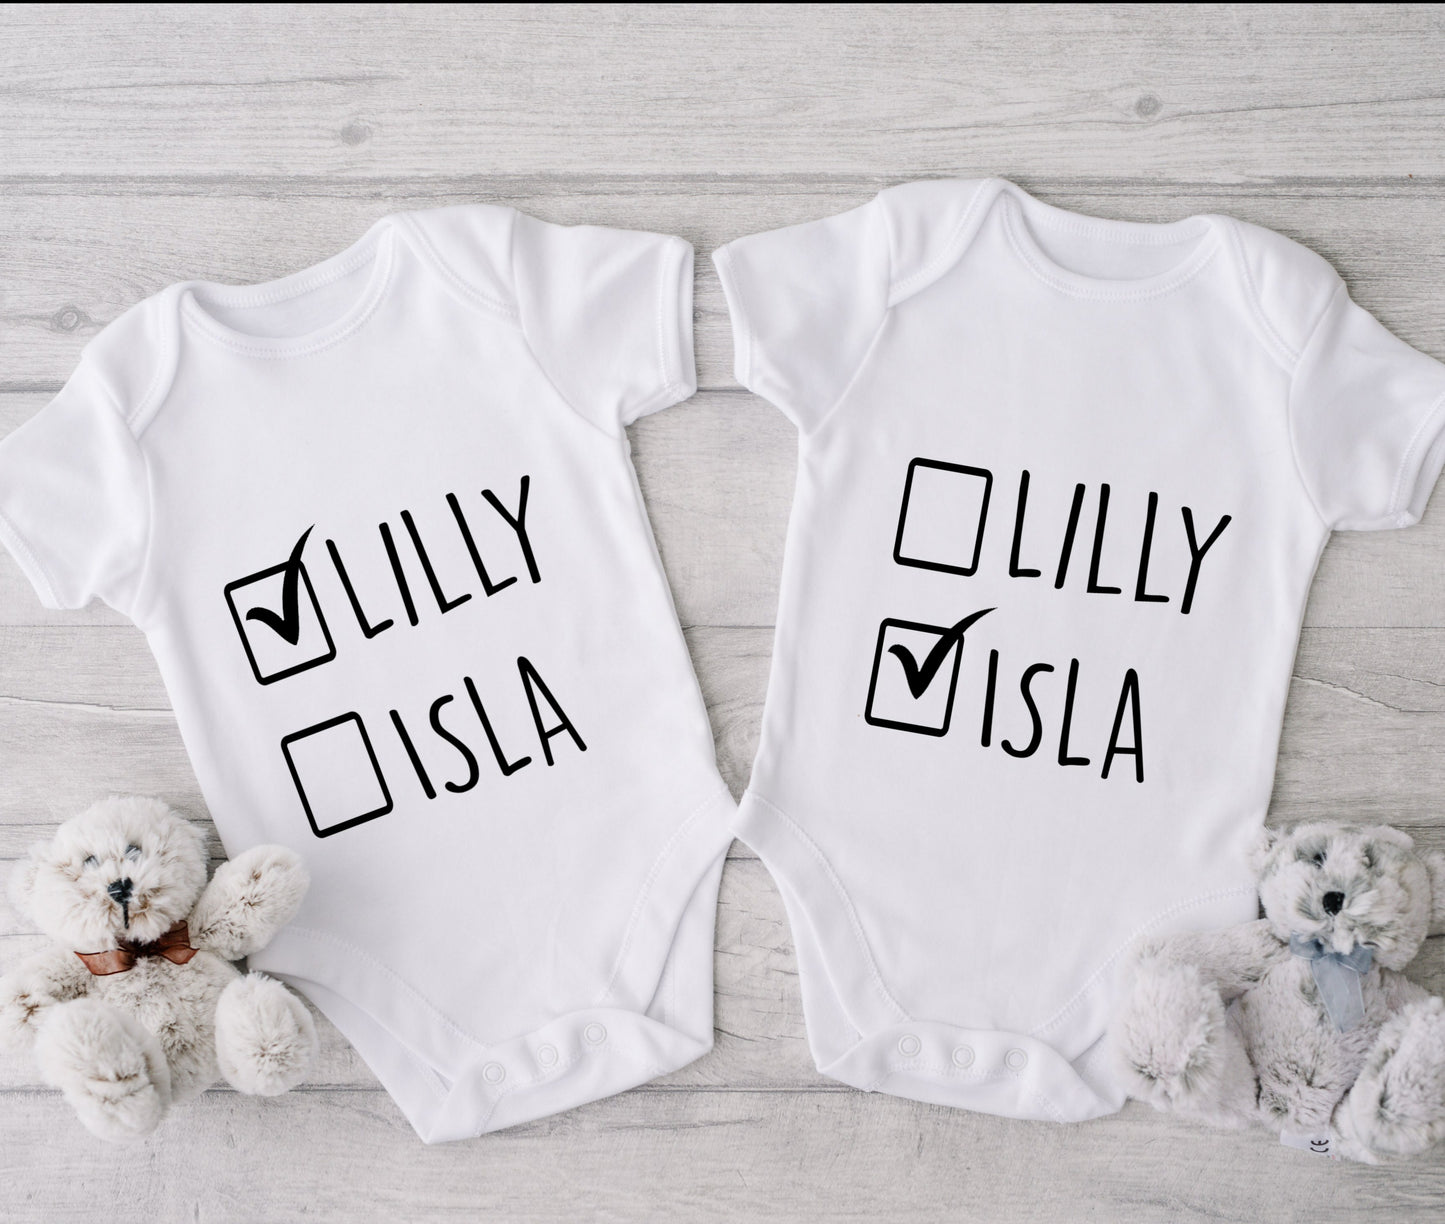 Twin Baby Vests - Name Check!